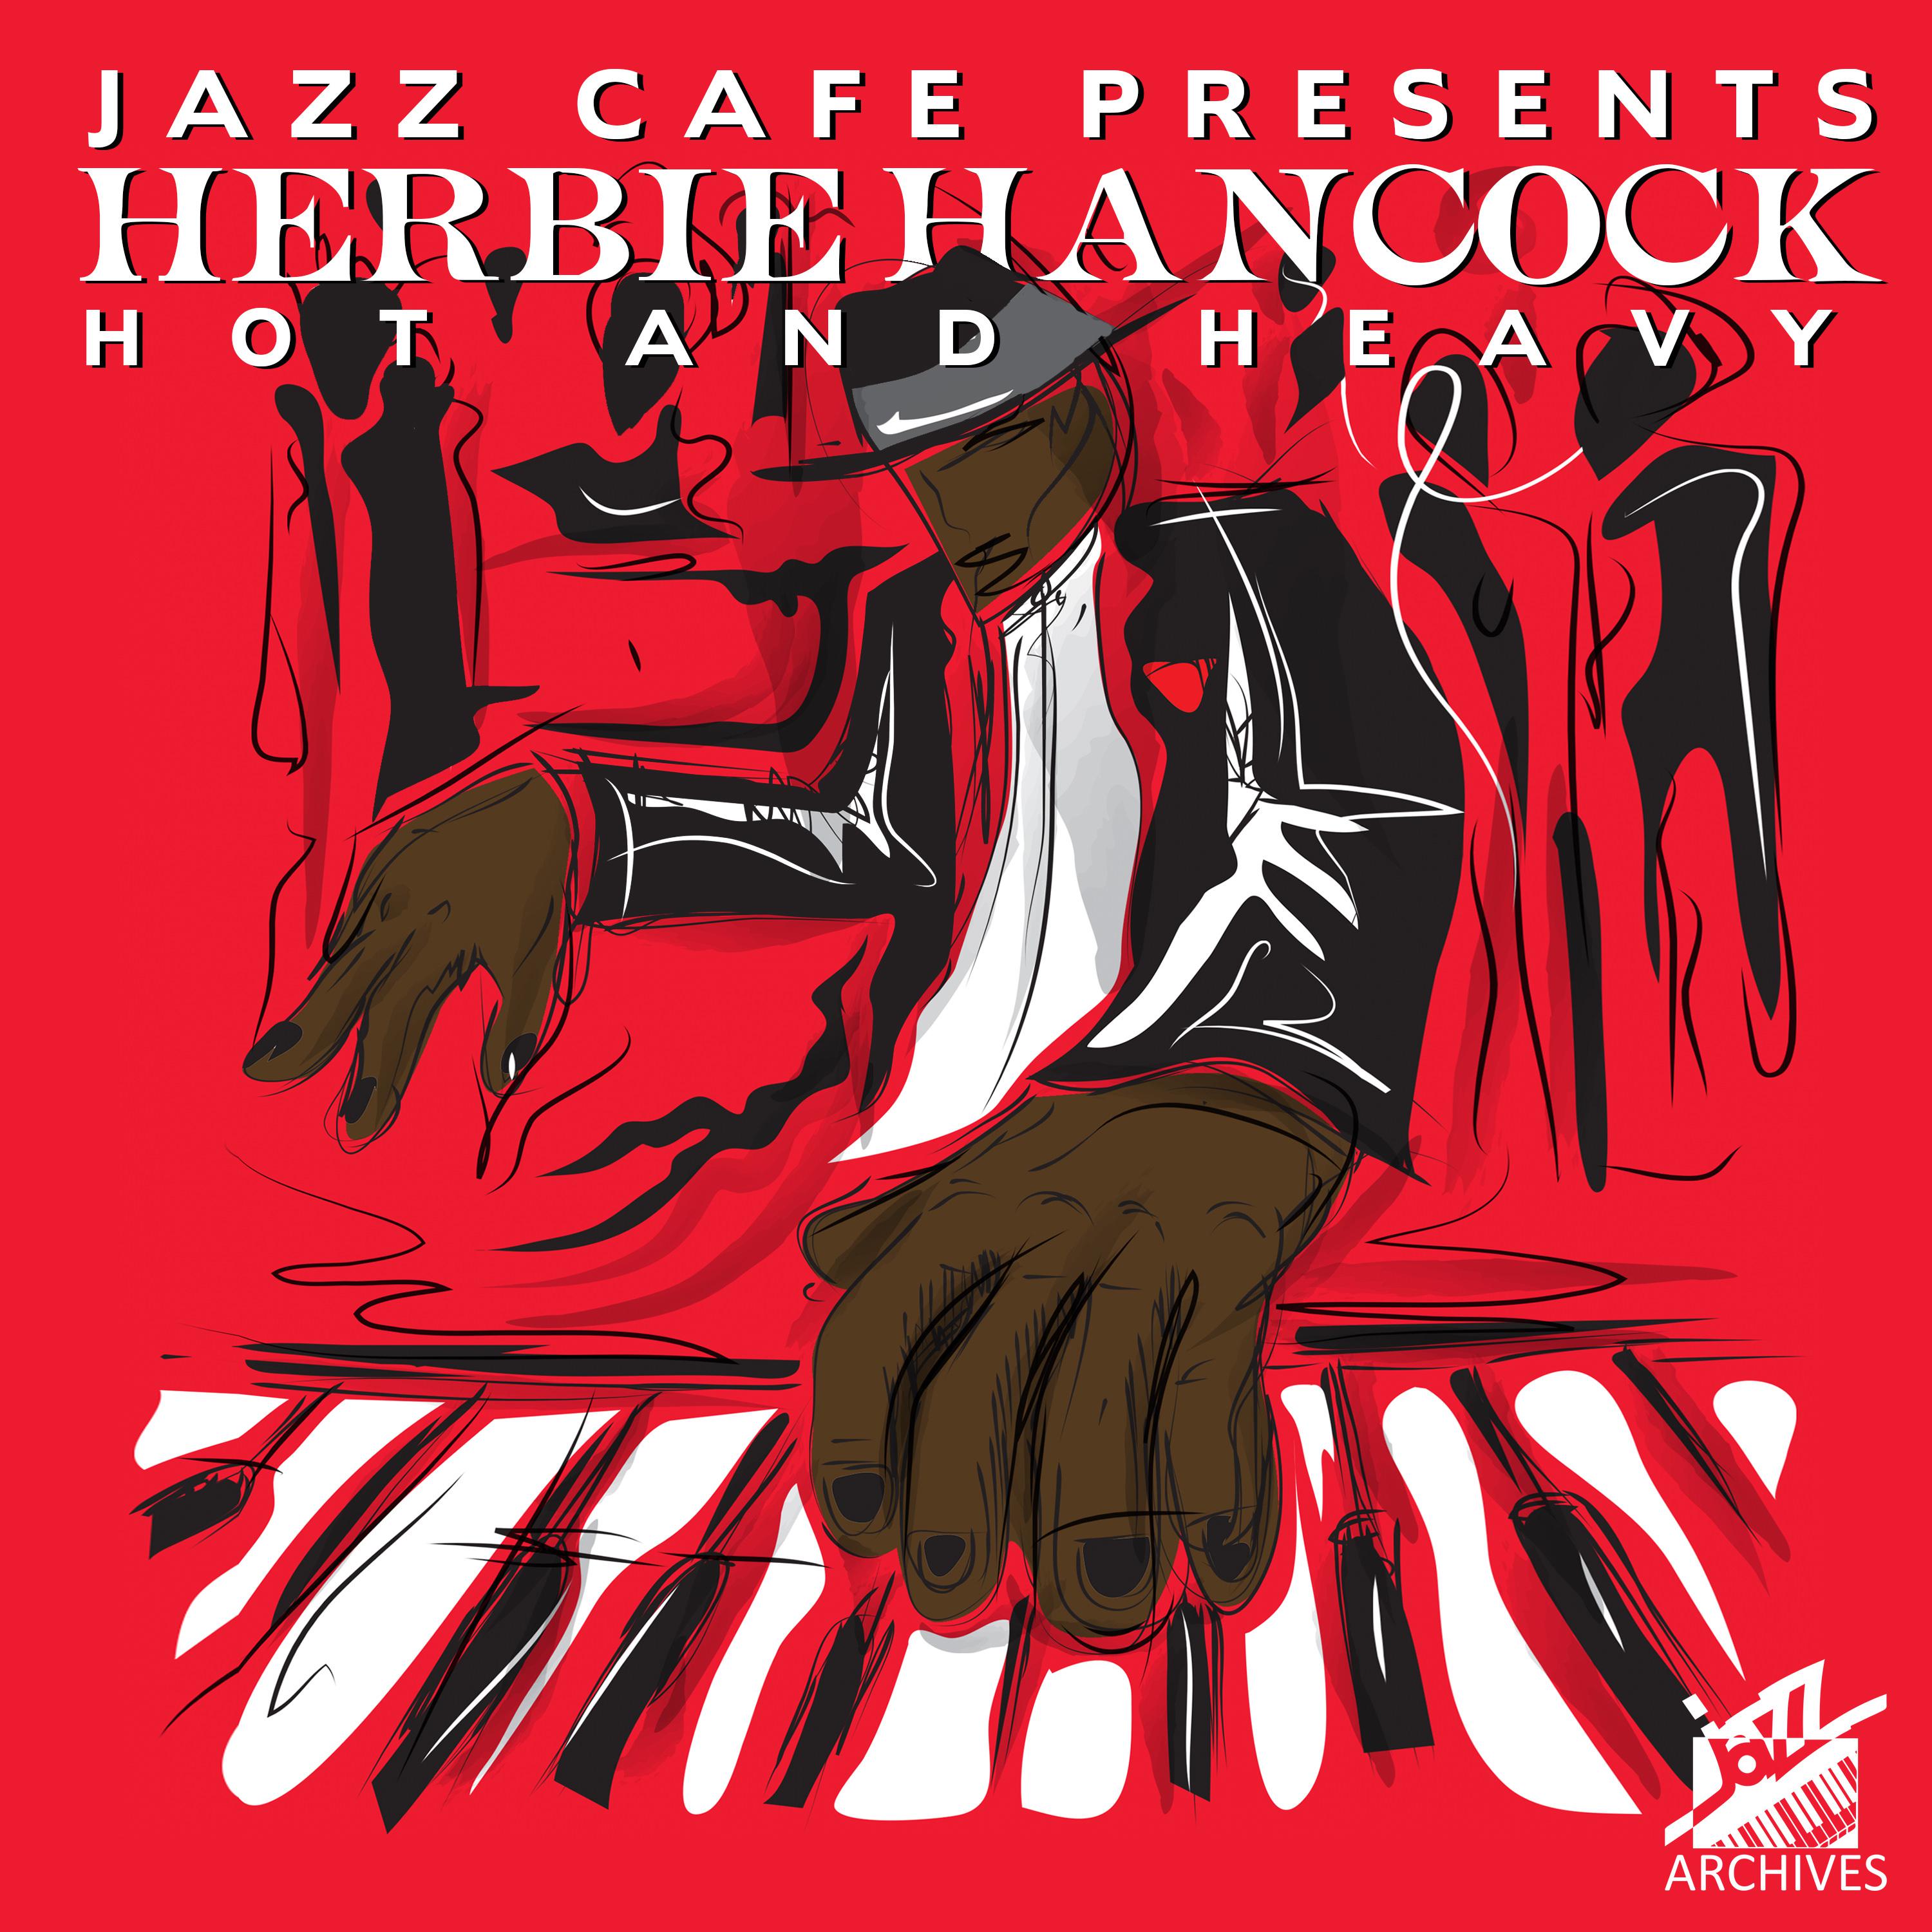 Jazz Cafe Presents: Herbie Hancock Hot and Heavy